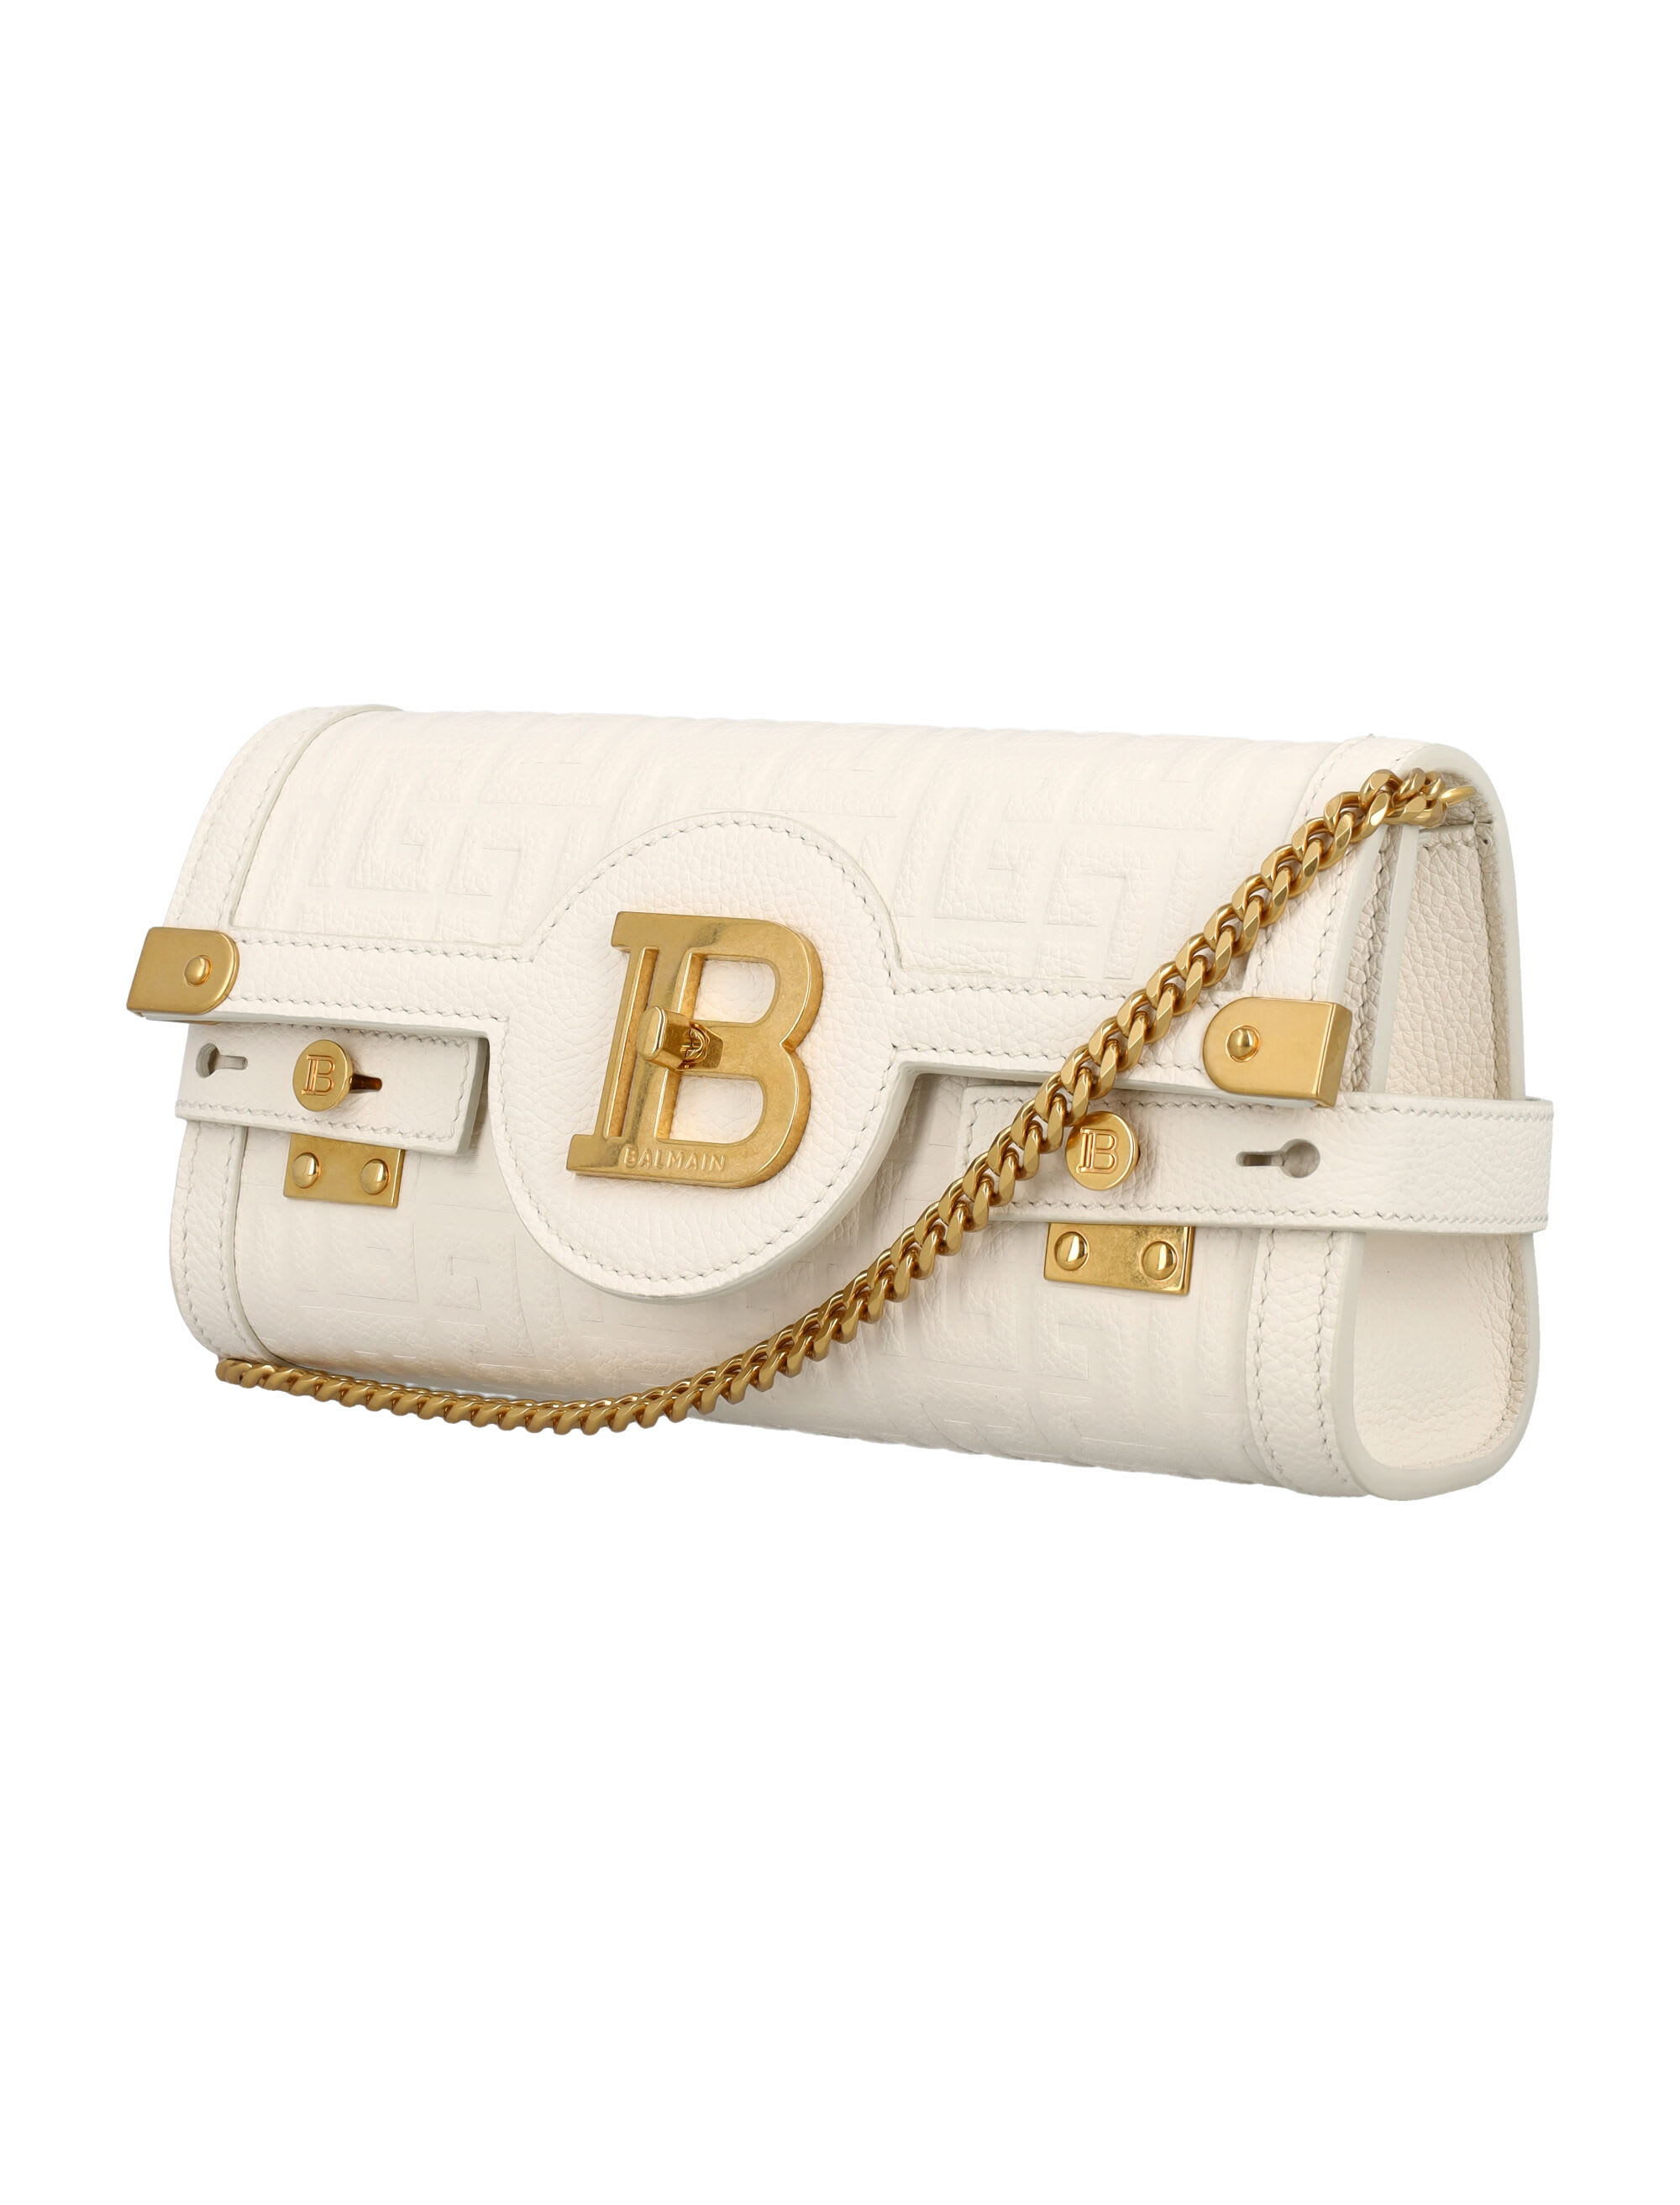 Mm purses – The B'Cute Brand